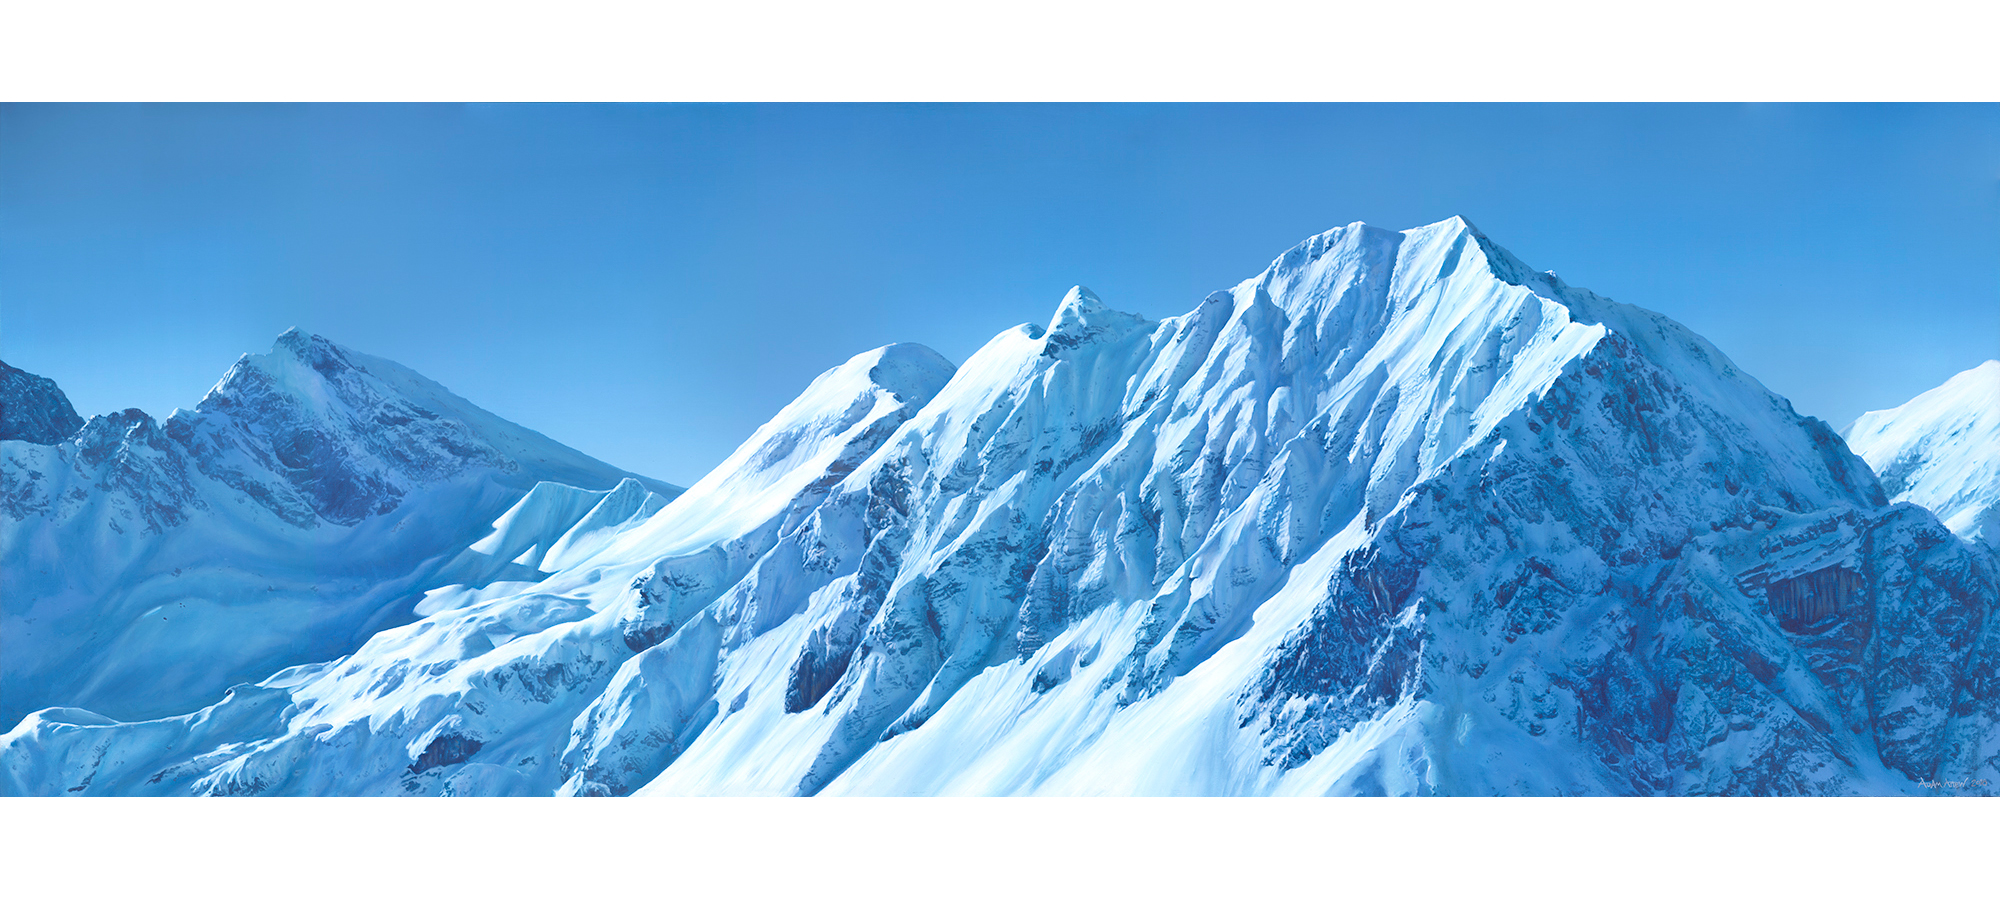 Austria Lech Attew Painting Landscape artist art ski snowboard mountain winter Snow Alpine Alps Montagne Alpes